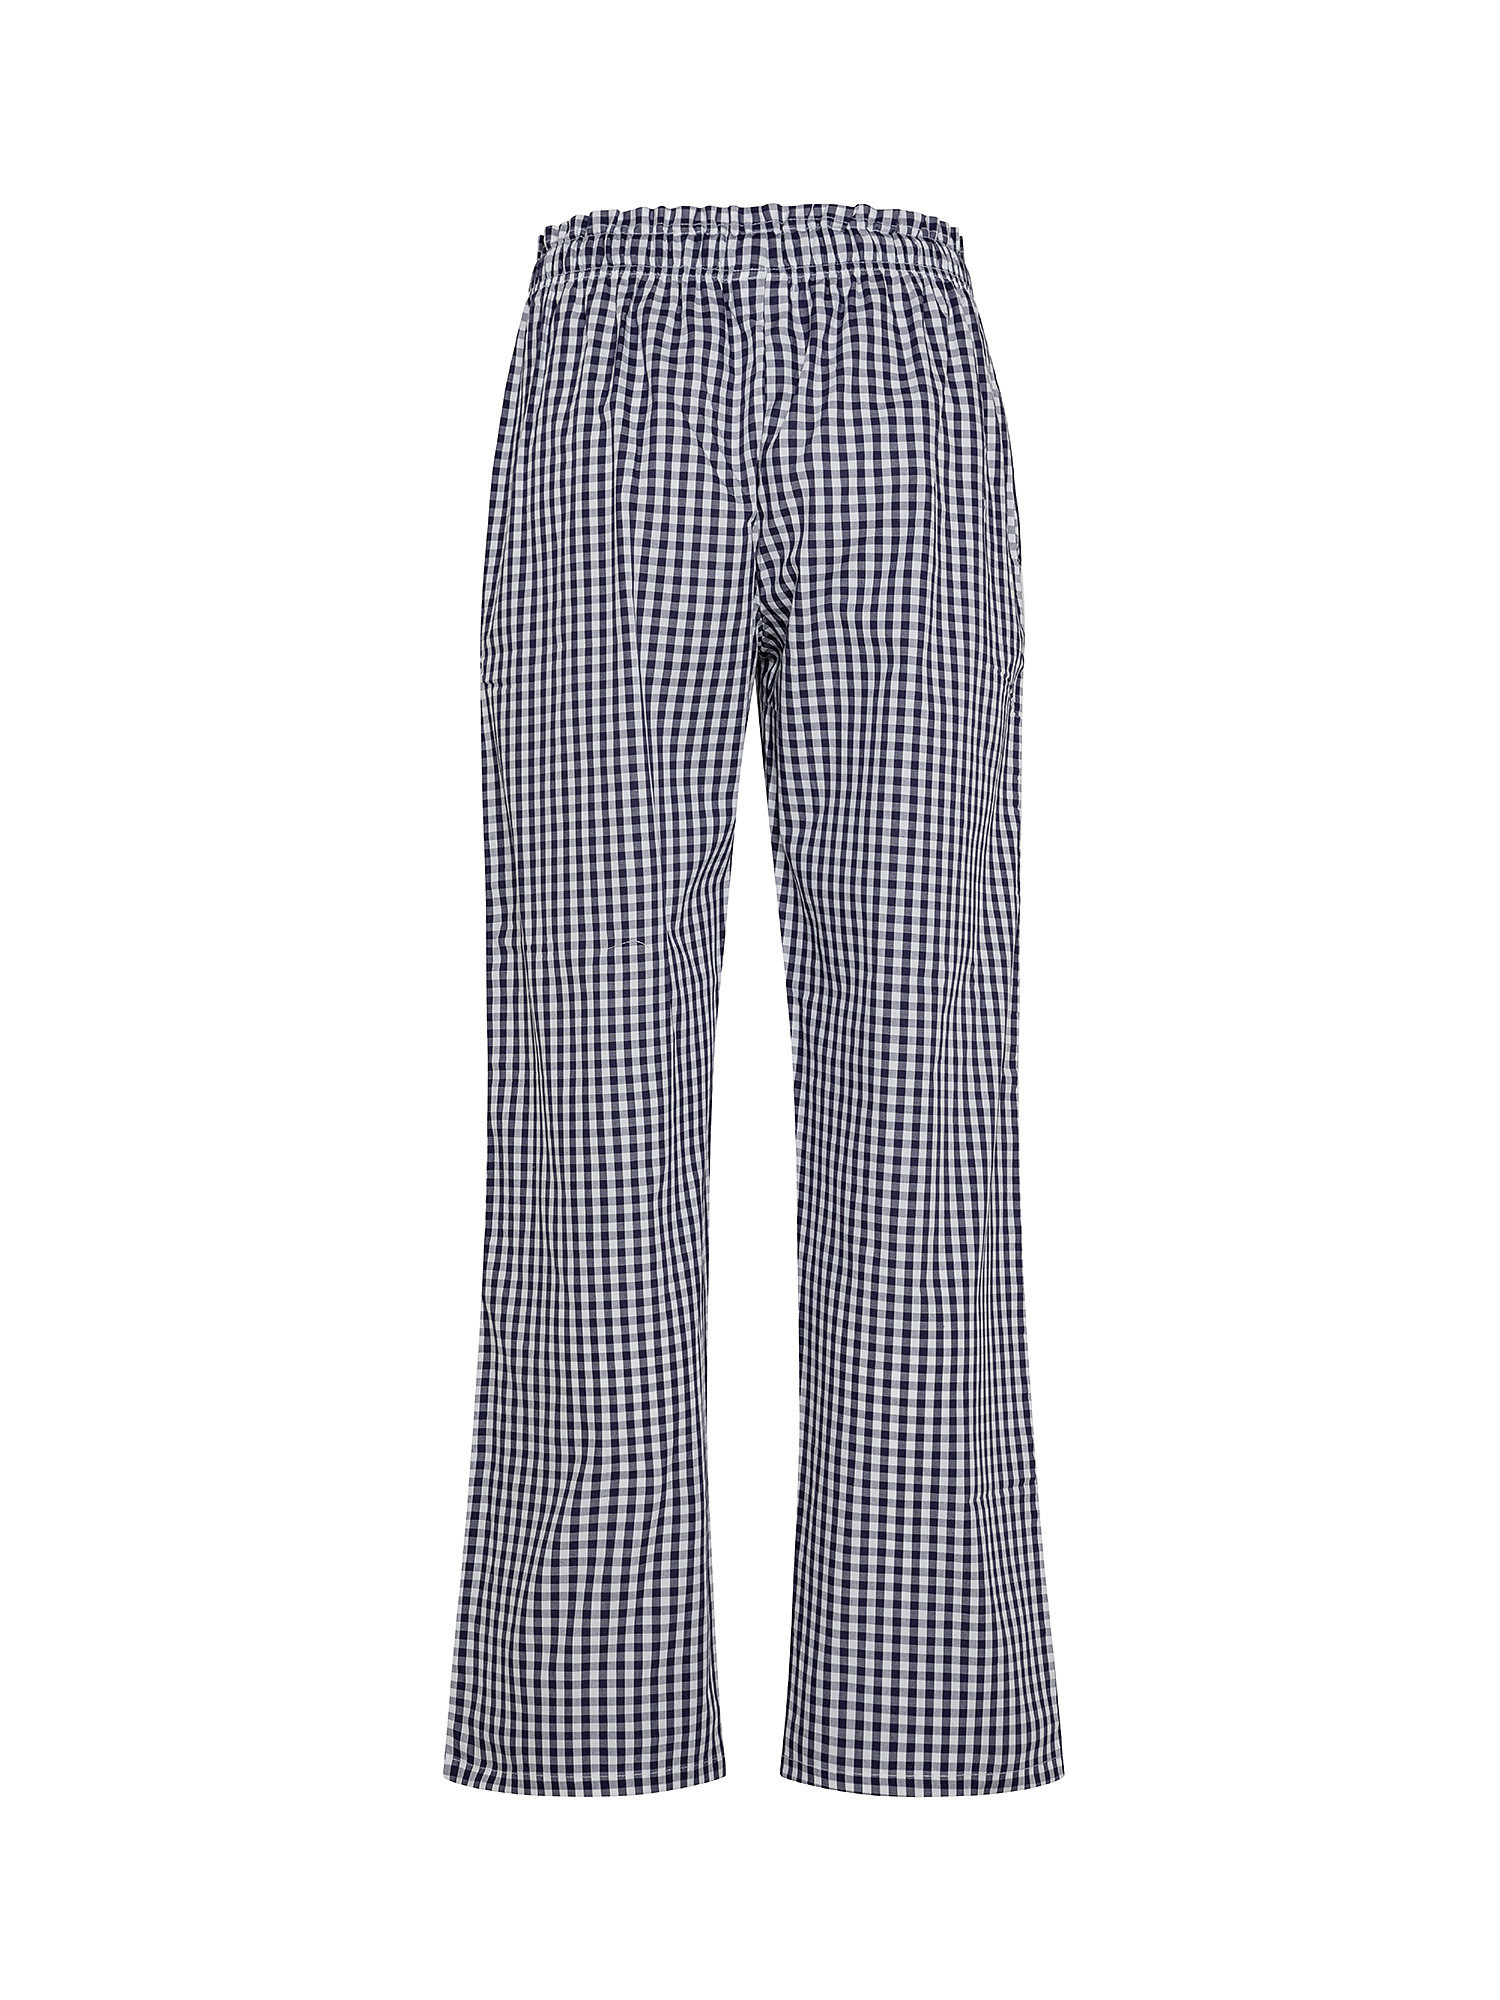 Pantaloni cotone tinto filo a quadretti, Blu, large